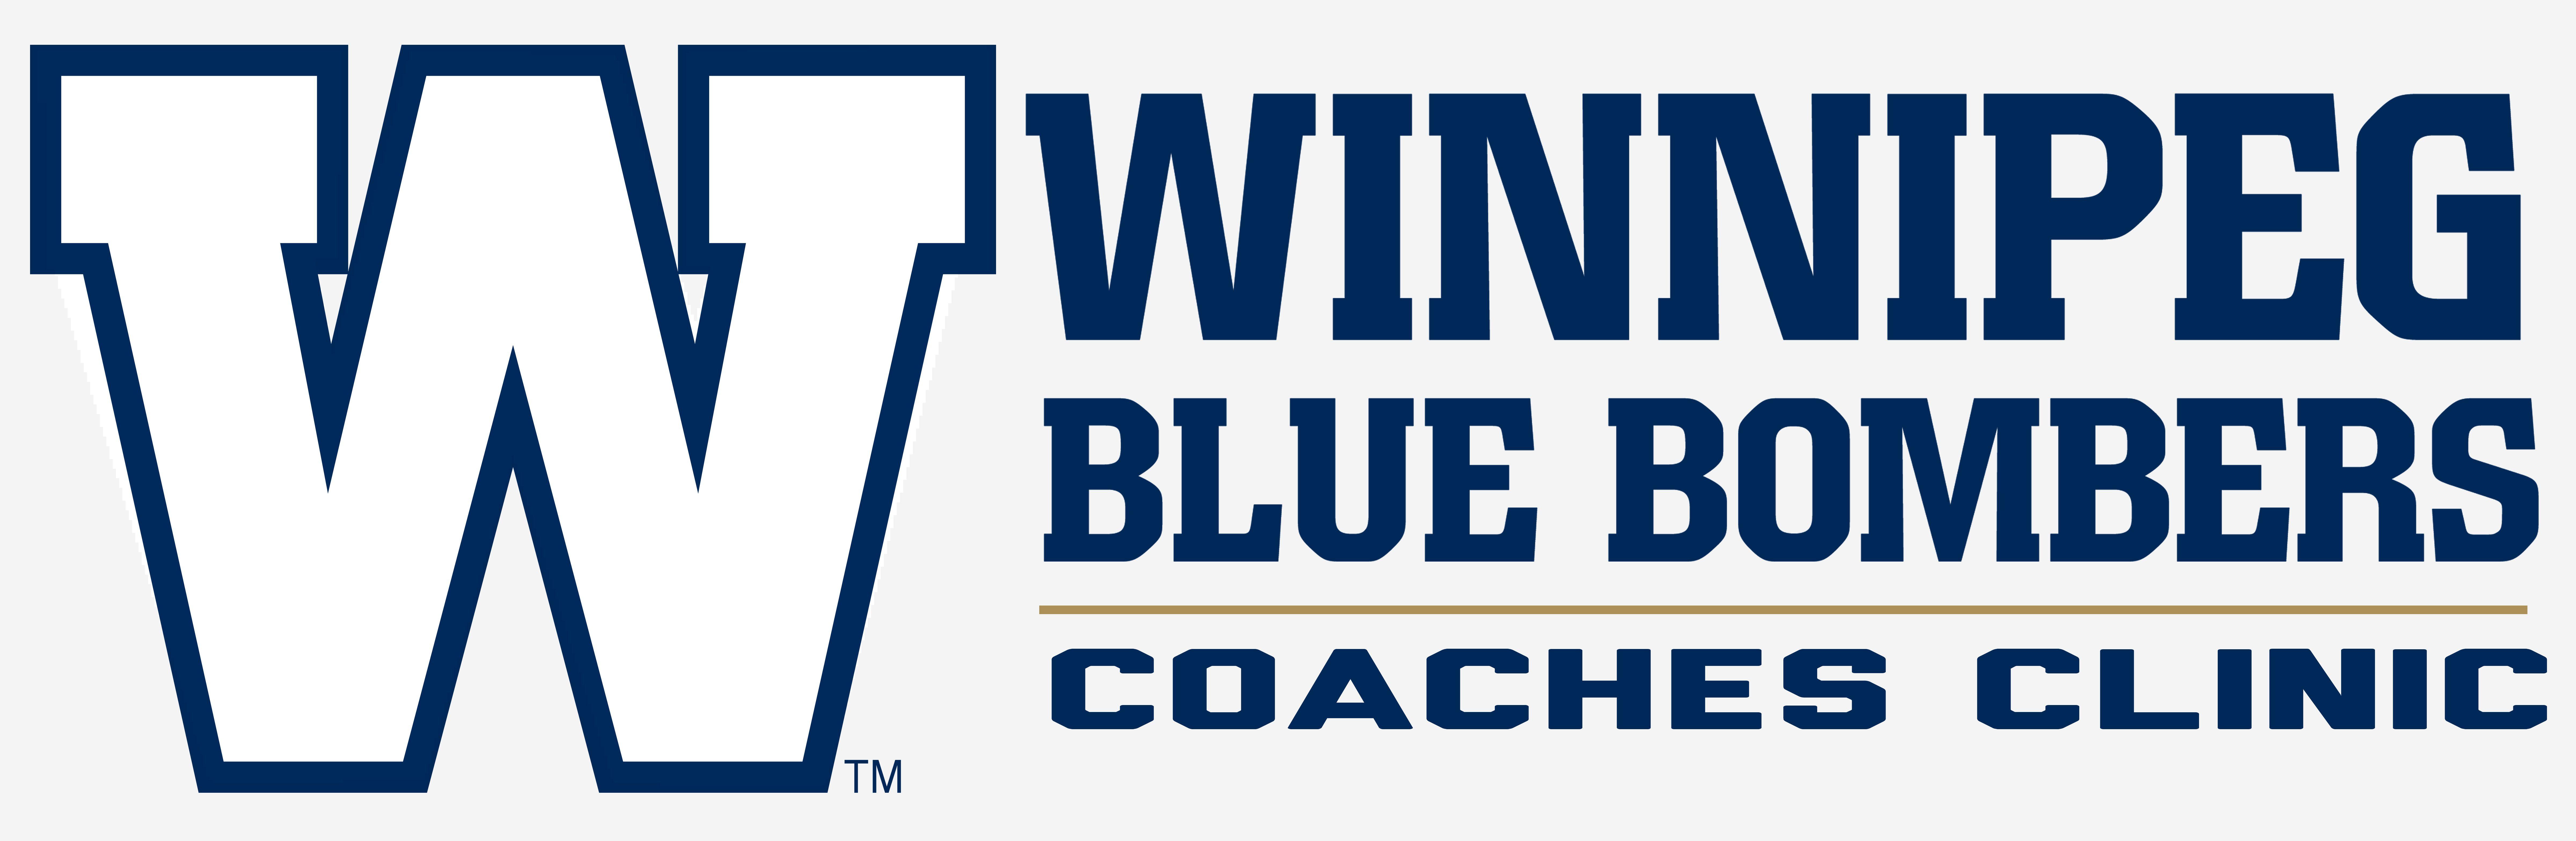 Winnipeg Blue Bombers Logo - Coaches Clinic Blue Bombers